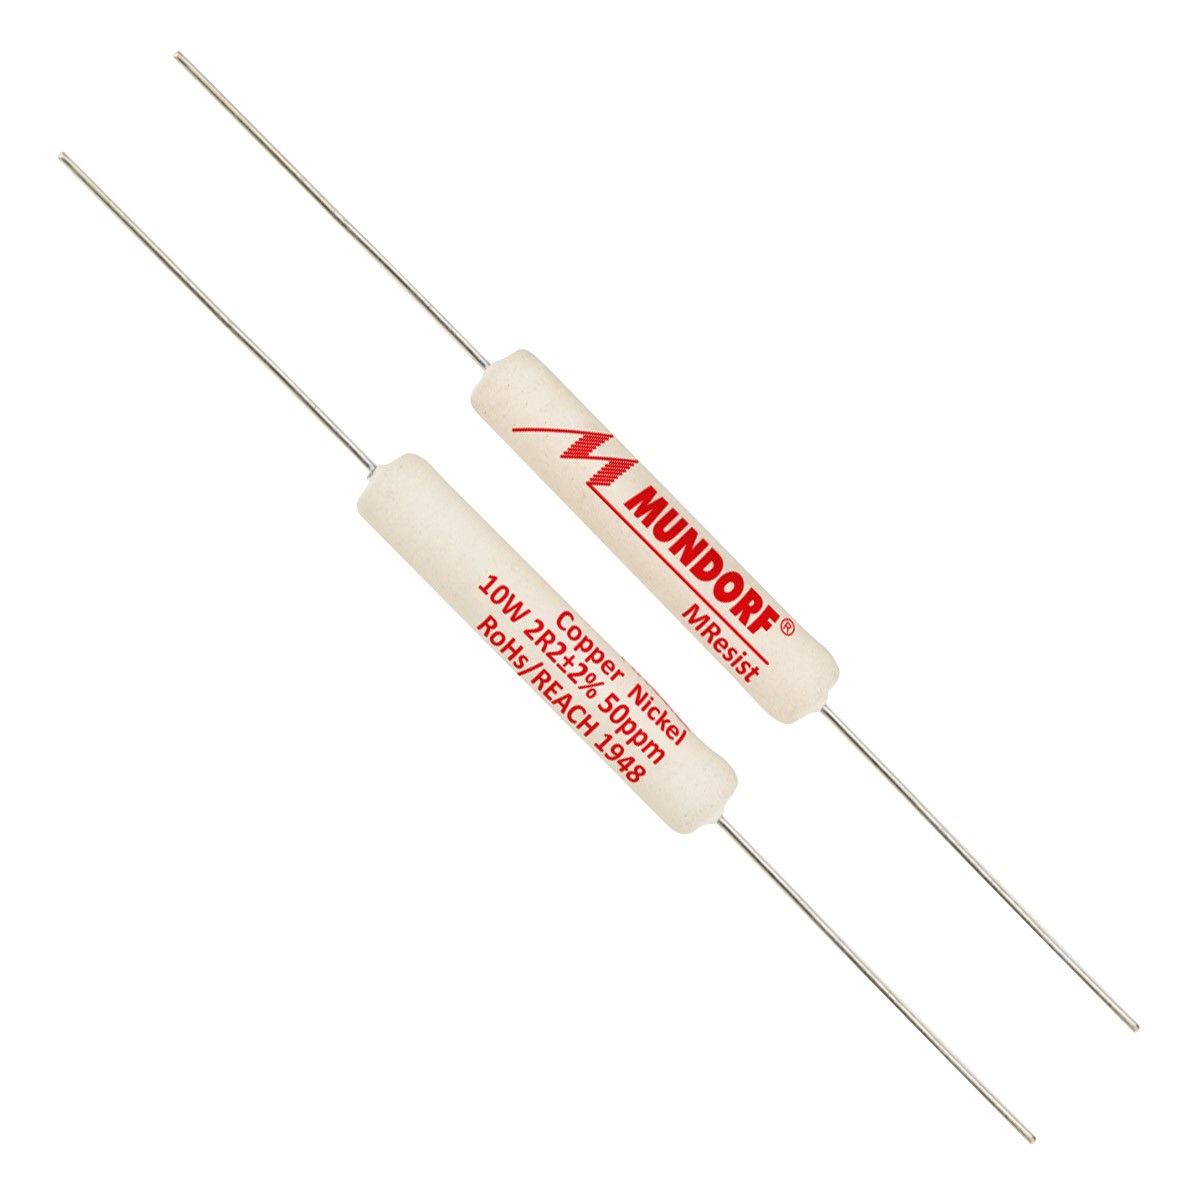 MUNDORF MRESIST CLASSIC Resistor 10W 3.3 Ohm